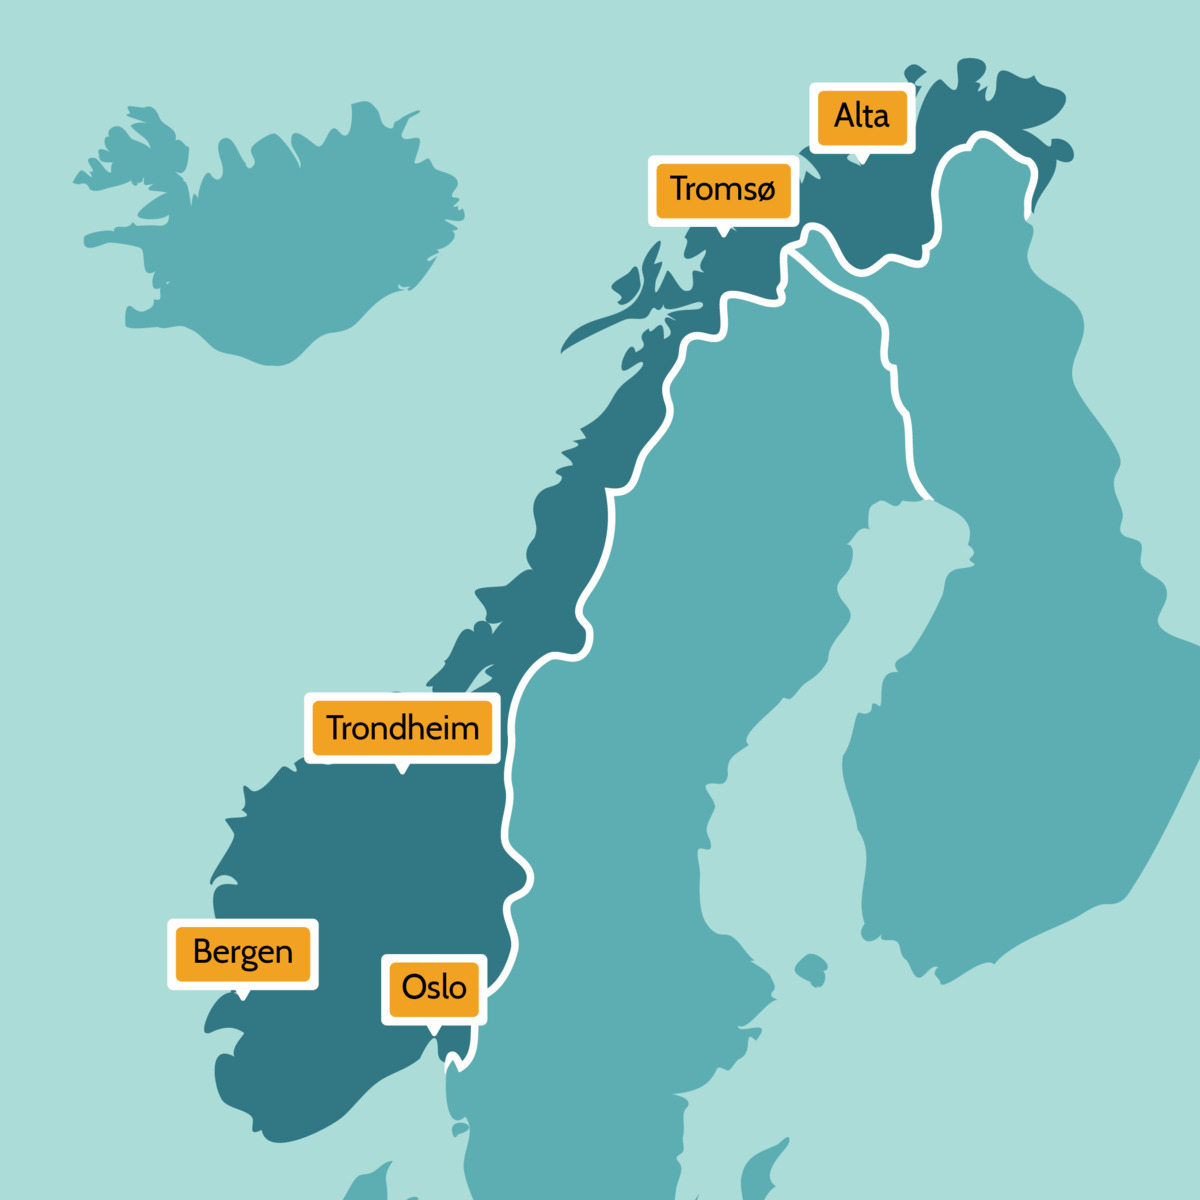 Norway's map